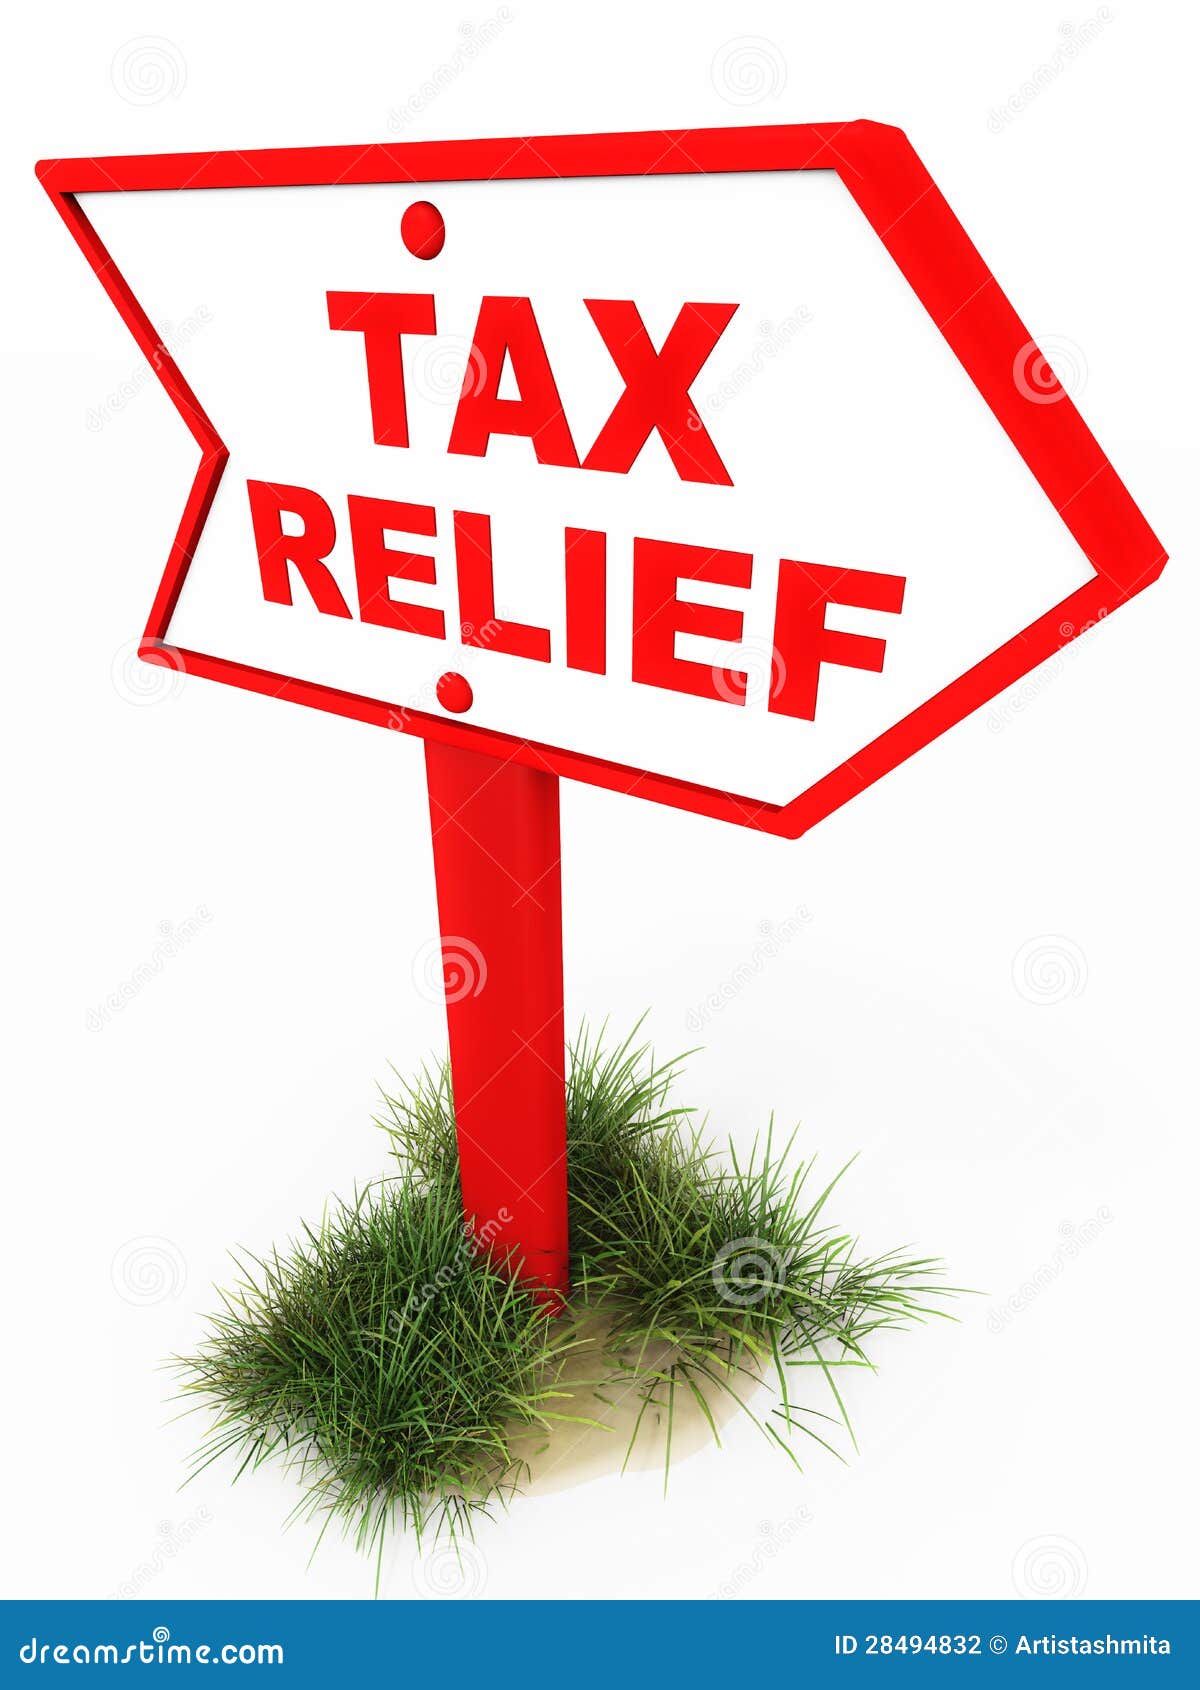 tax-relief-stock-illustration-illustration-of-street-28494832